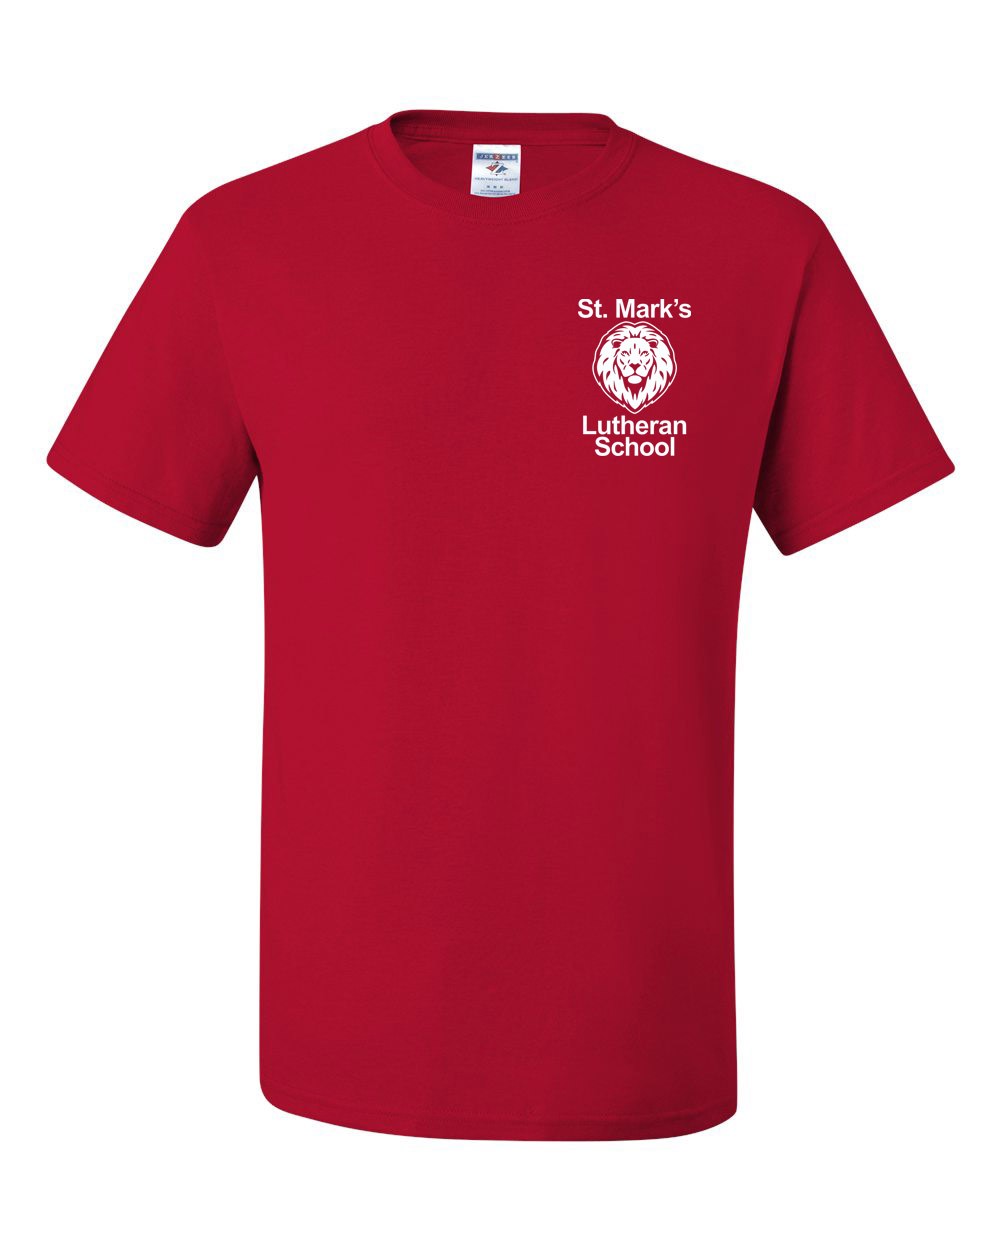 SMLS S/S Red Gym T-Shirt w/ School Logo